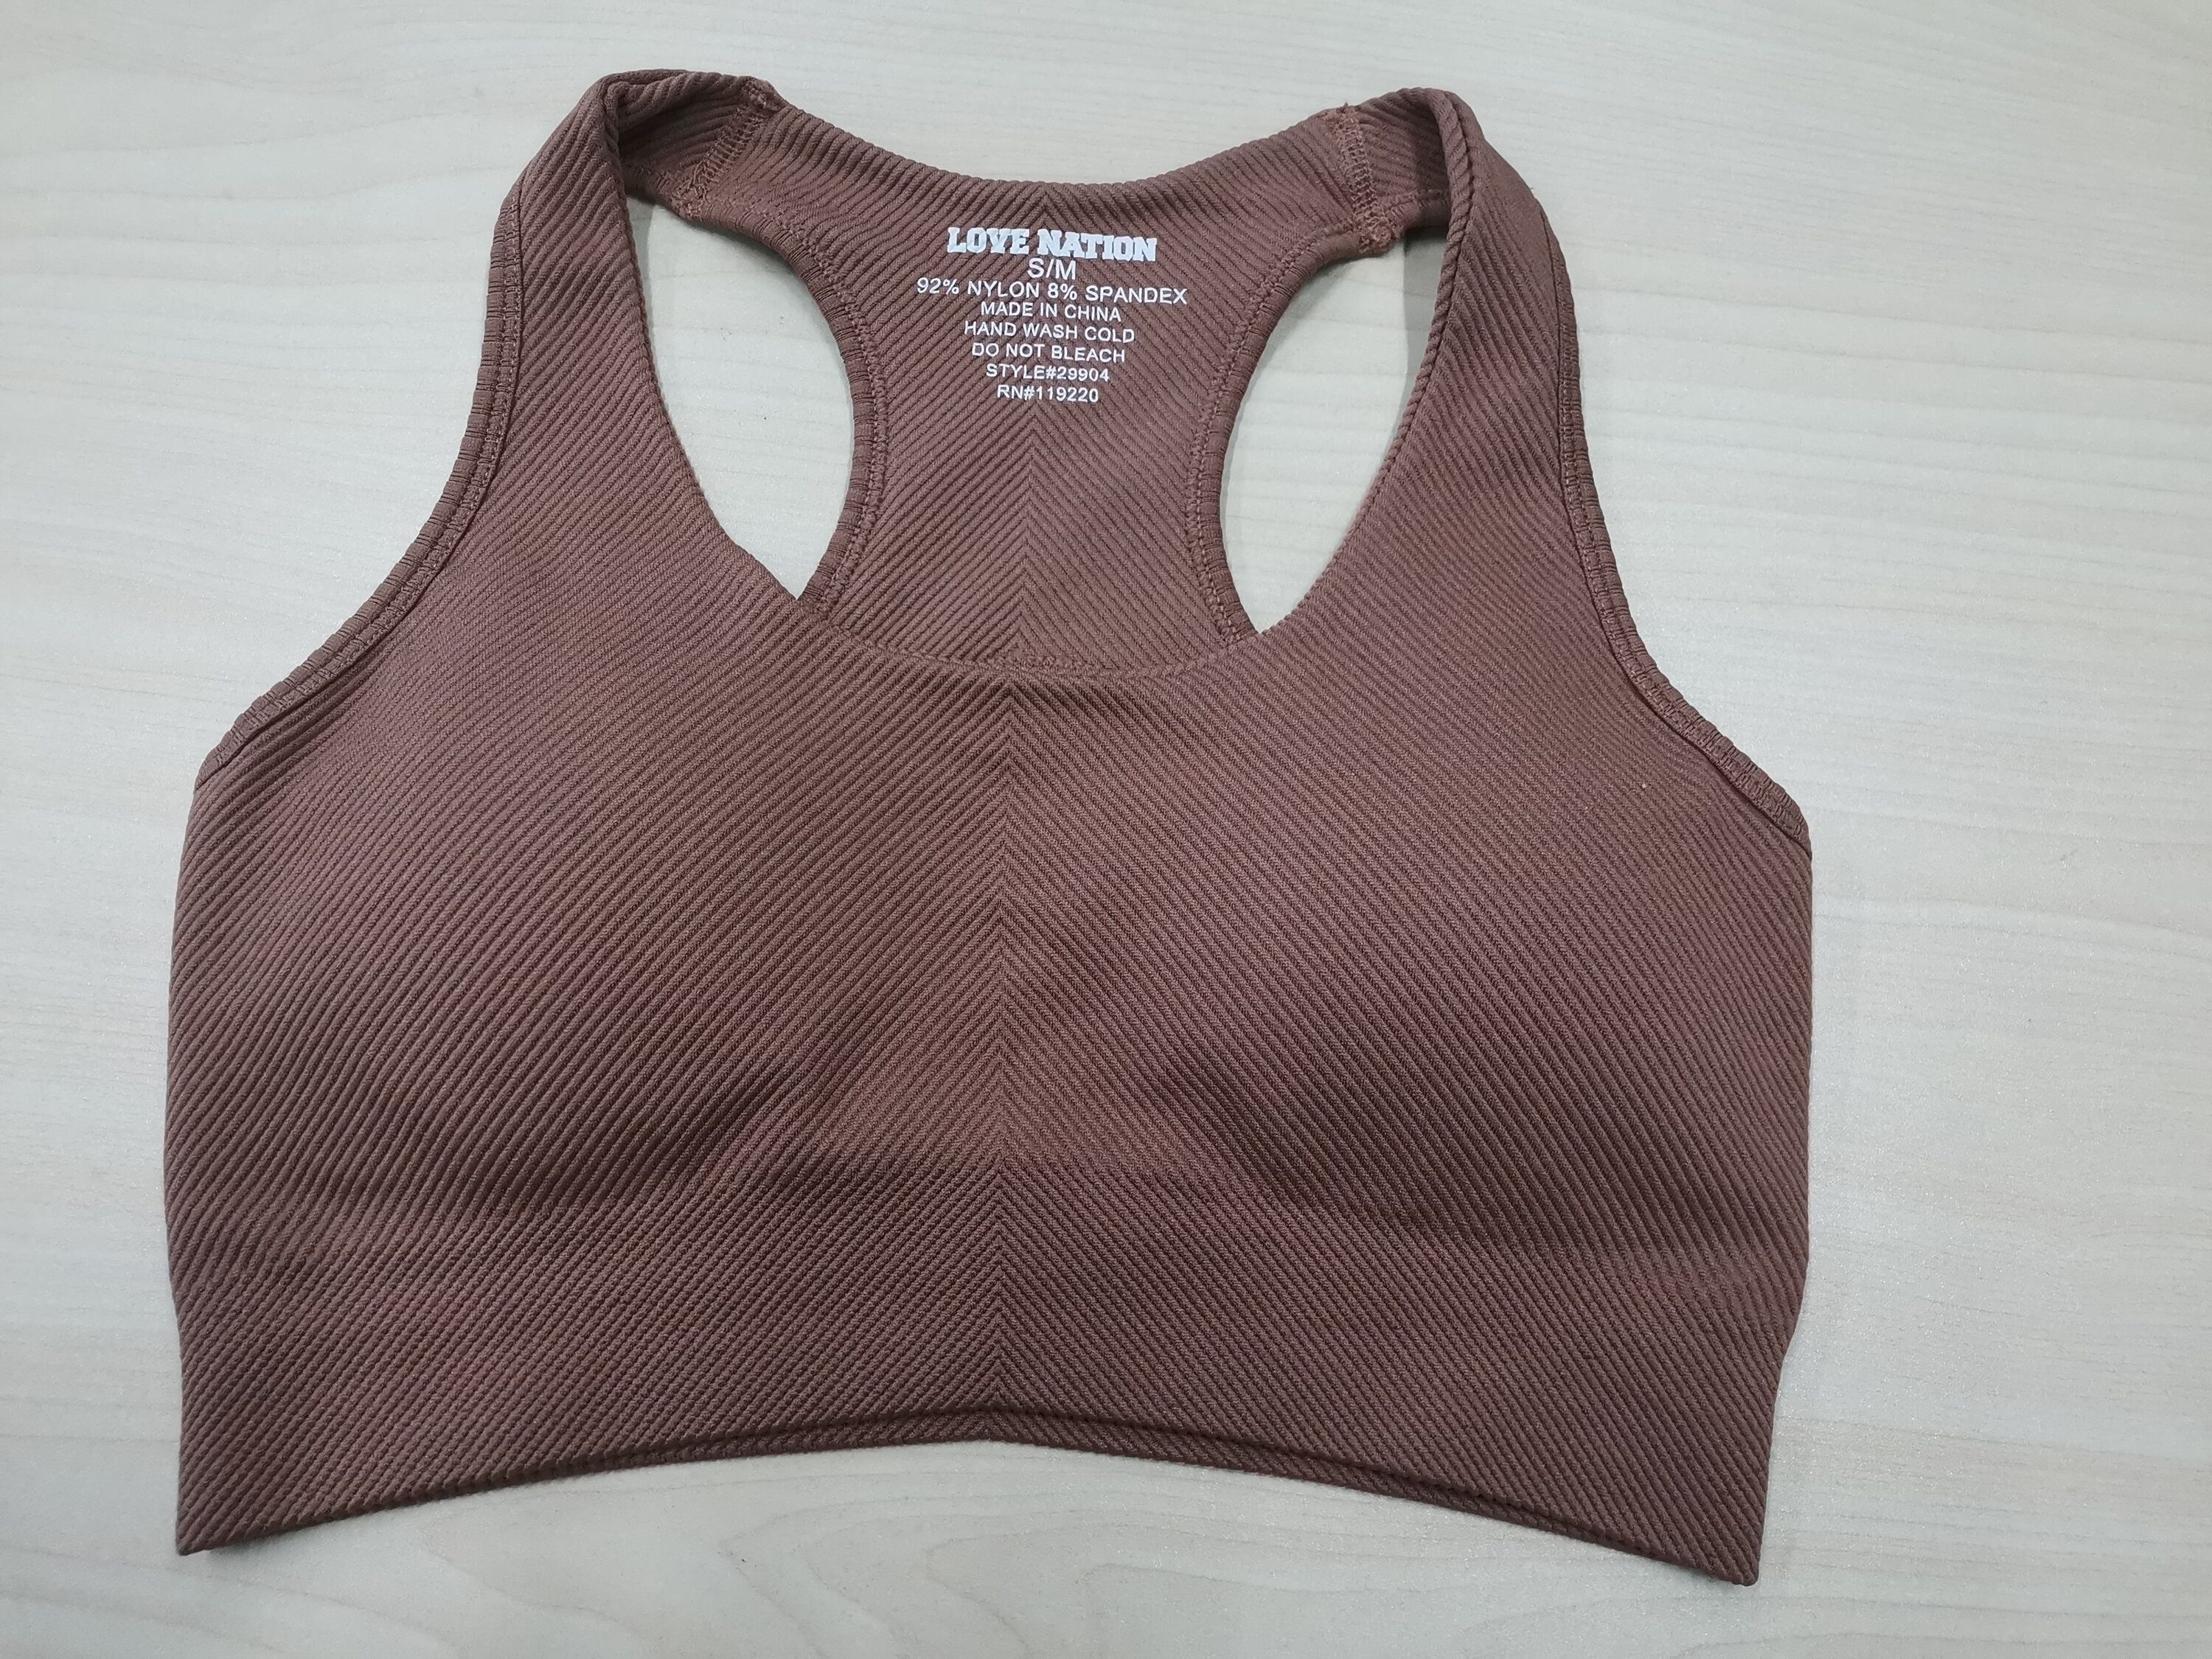 Oem/odm Women's Seamless Bras Yoga Sports Shoulder Bra Quick Dry